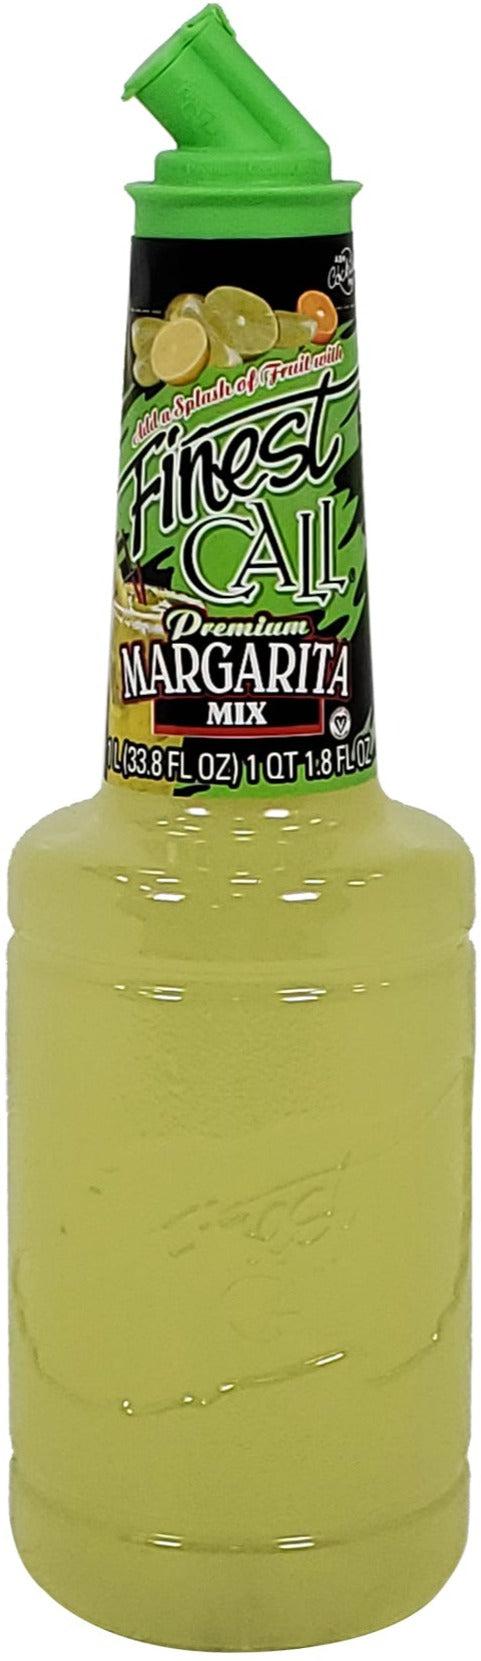 Finest Call - Margarita